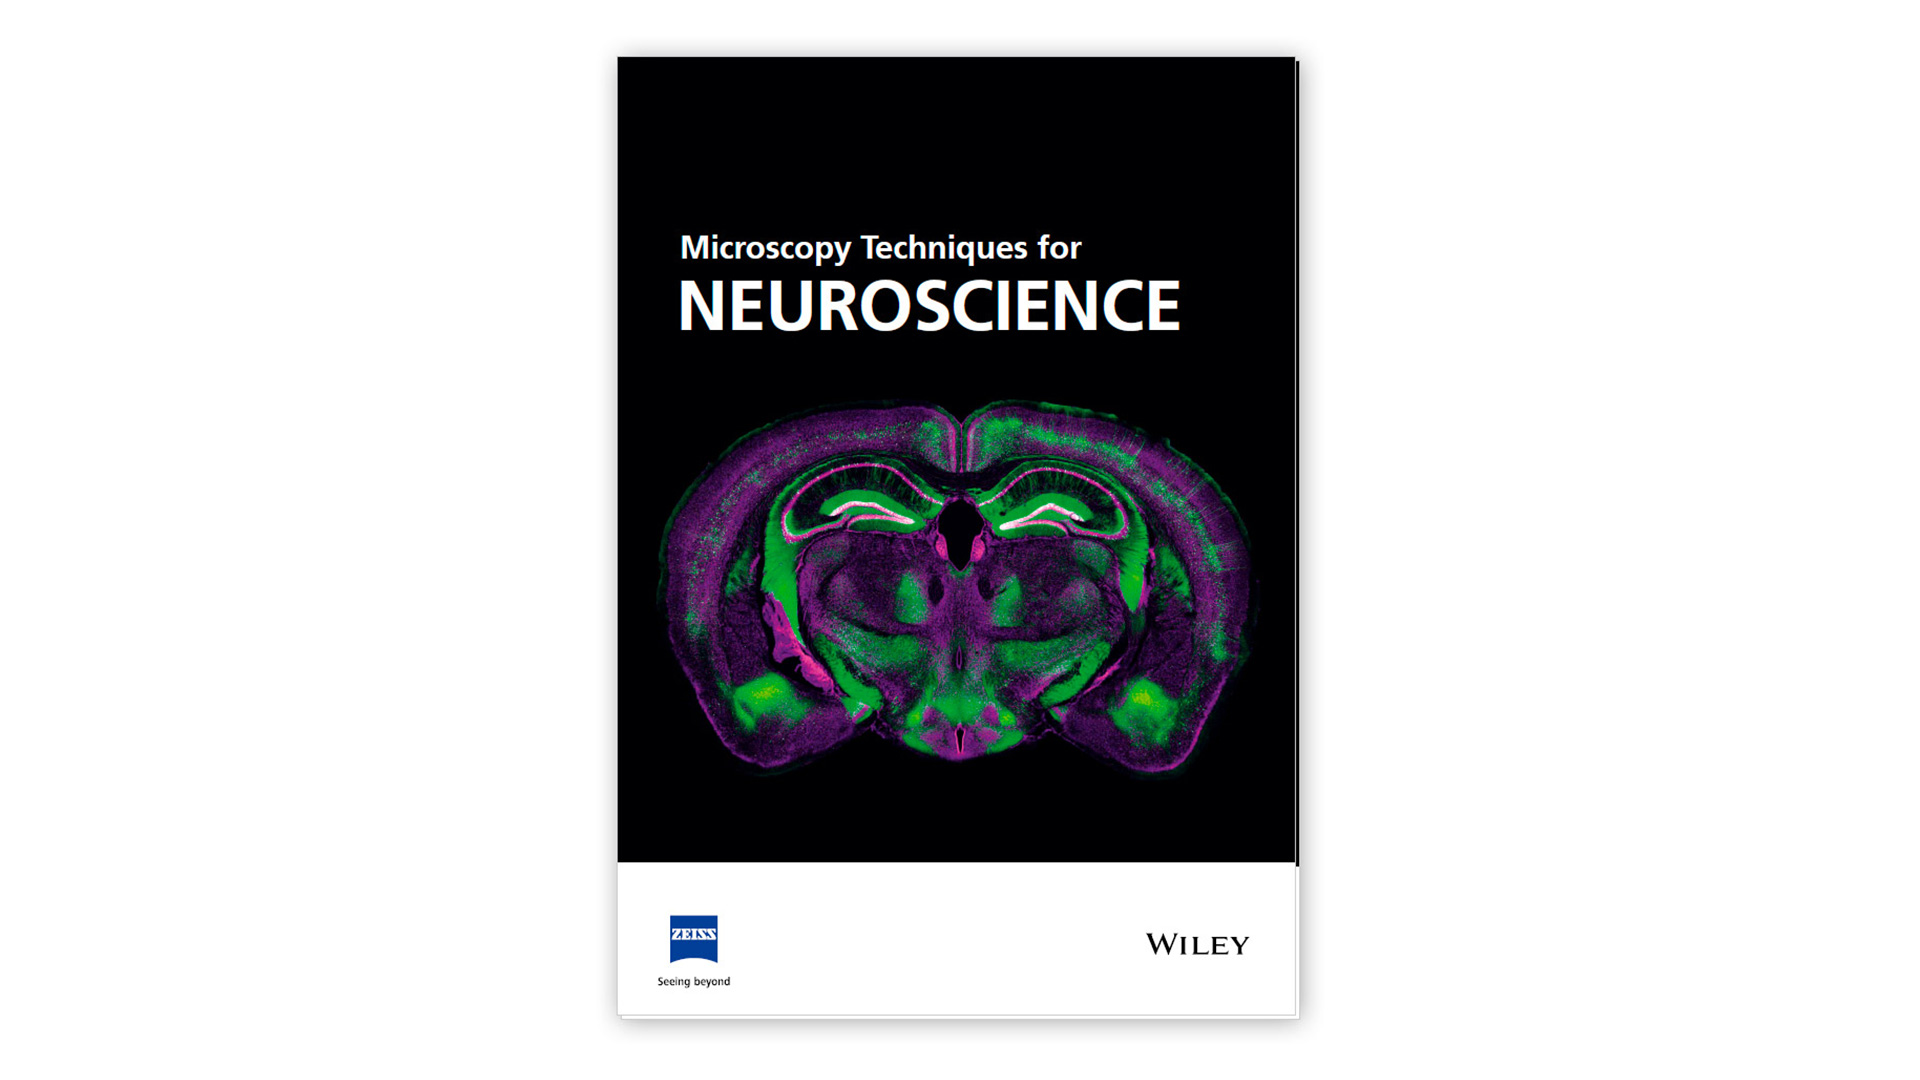 ZEISS Microscopy Techniques for Neuroscience Ebook